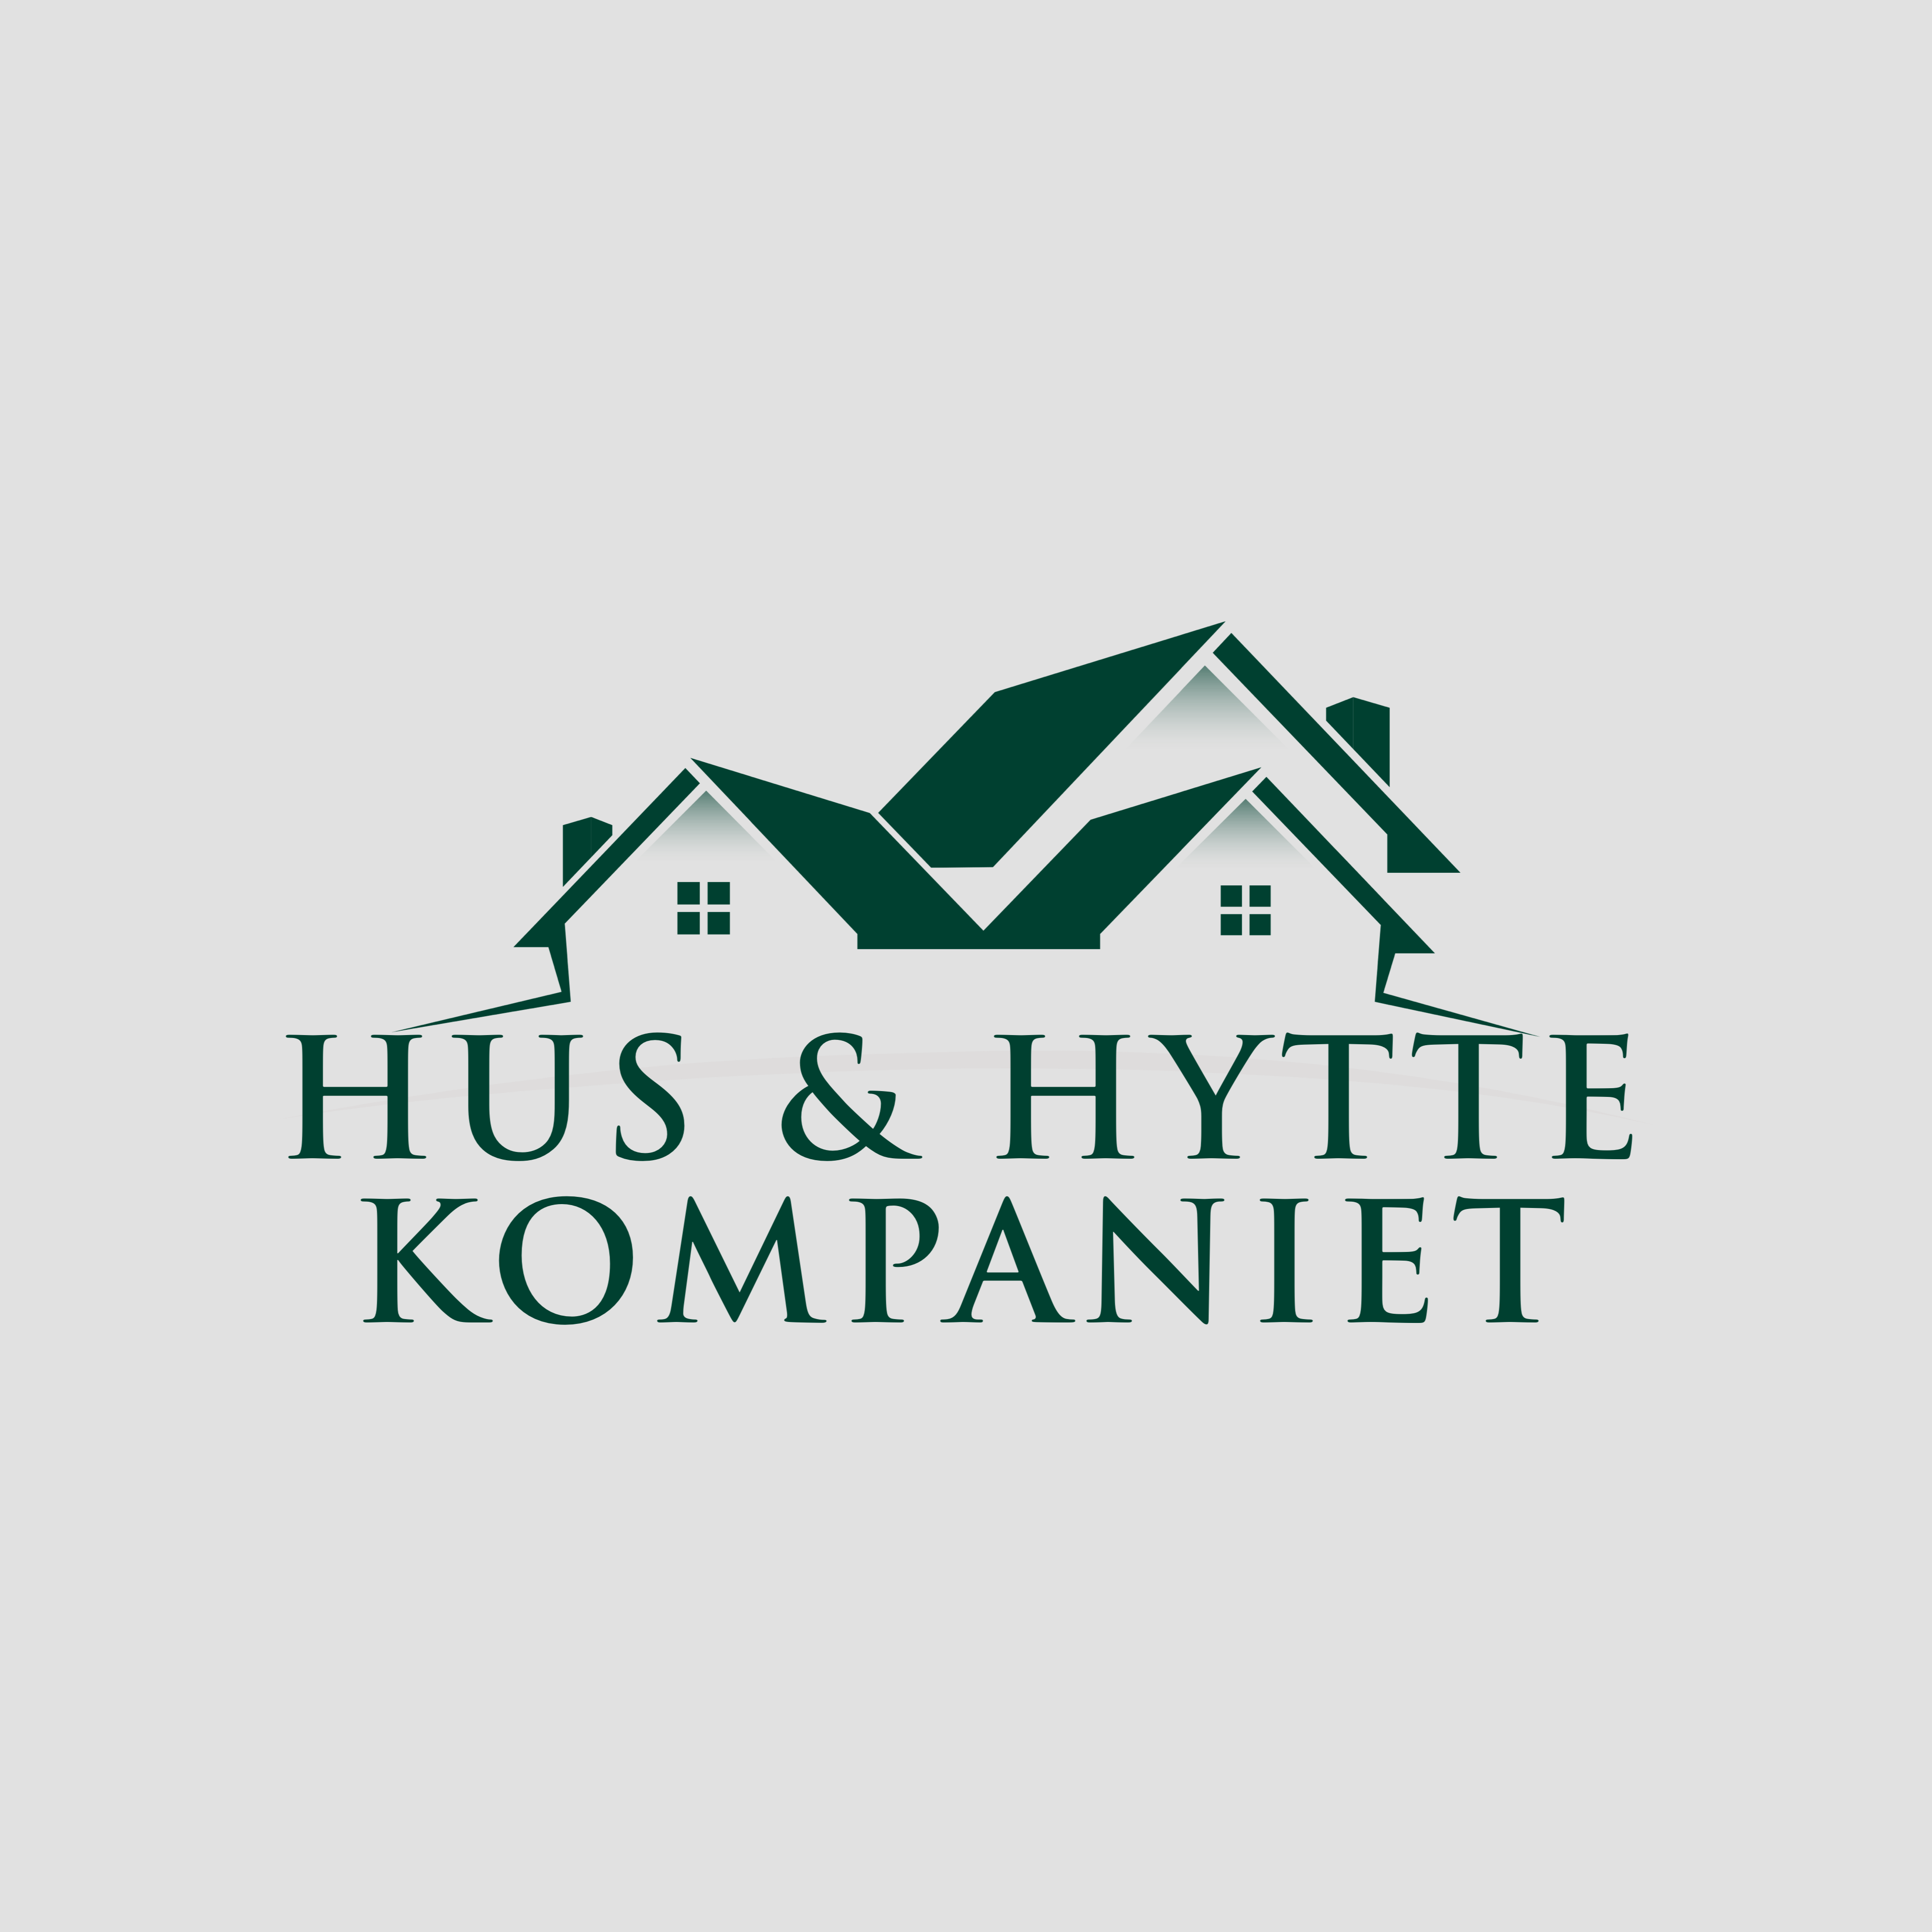 Hus & HytteKompaniet